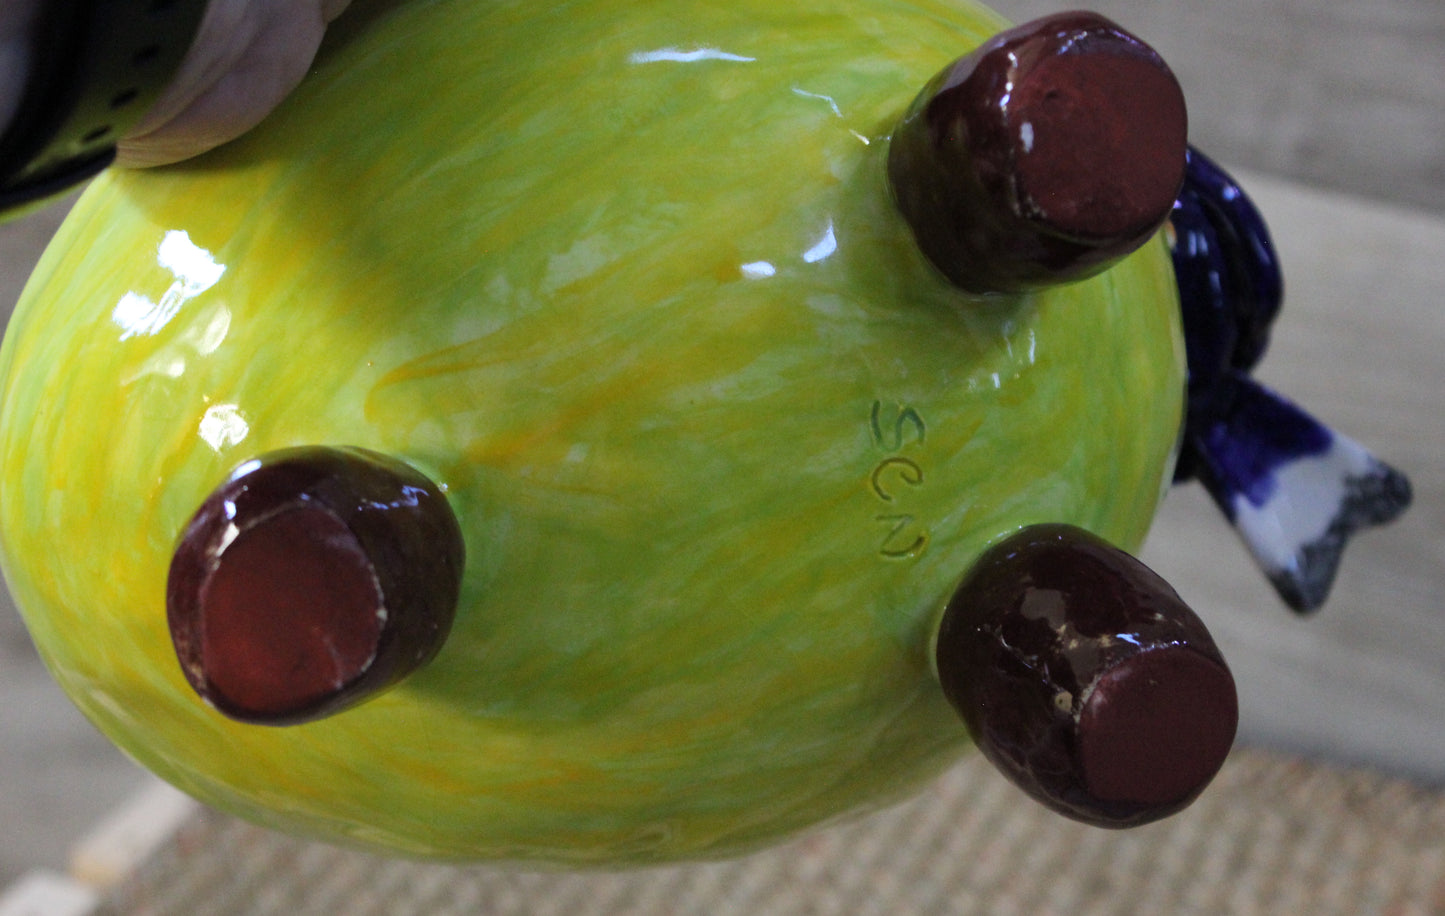 Ceramic Blue Bird Sculpture on Homemade Decorative Tabletop Knick Knack Bowl